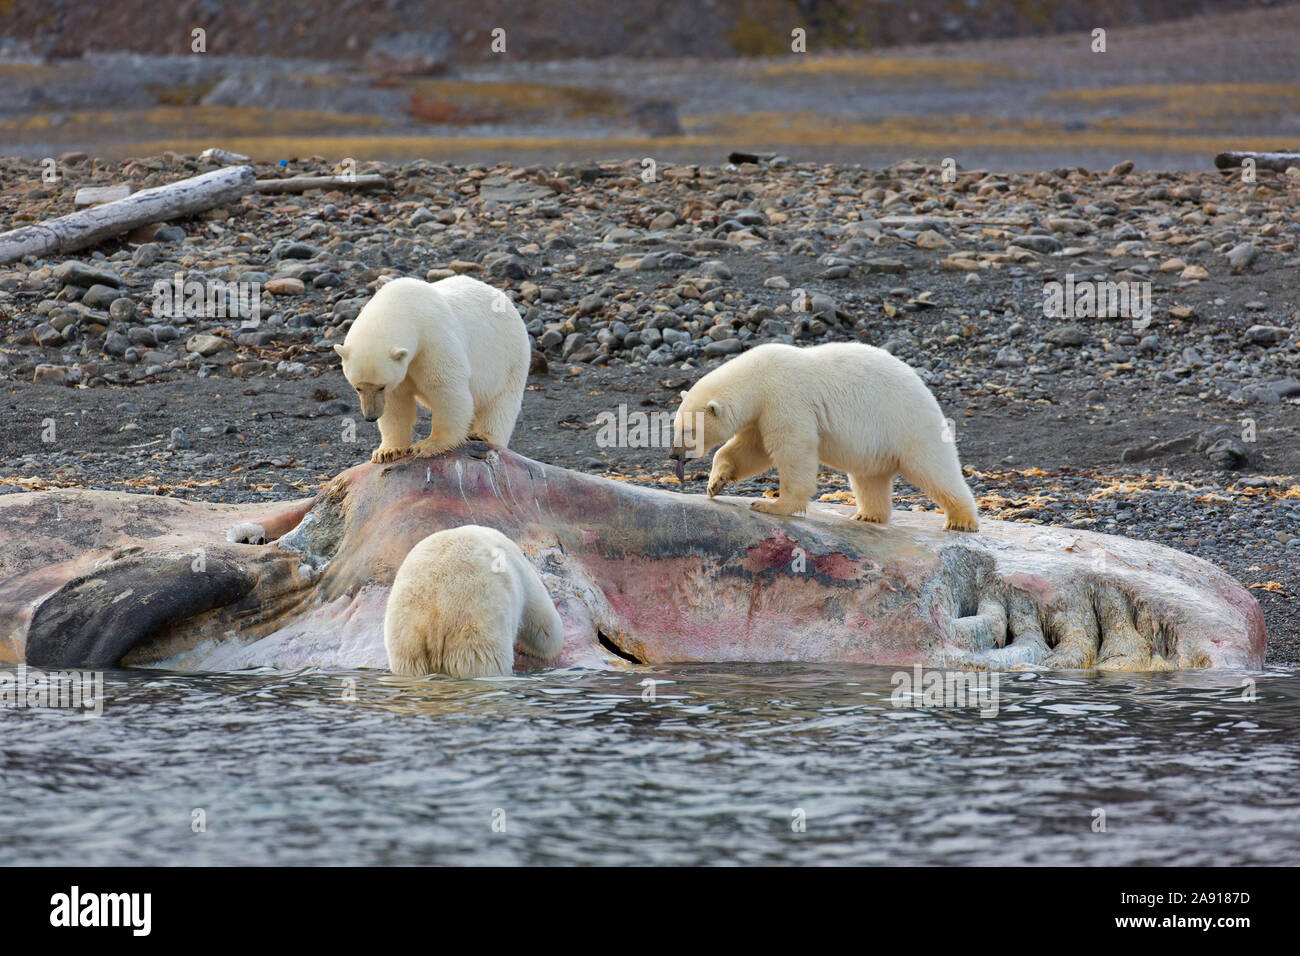 Three scavenging Polar bears (Ursus maritimus) feeding on carcass of stranded dead sperm whale along the Svalbard coast, Spitsbergen, Norway Stock Photo